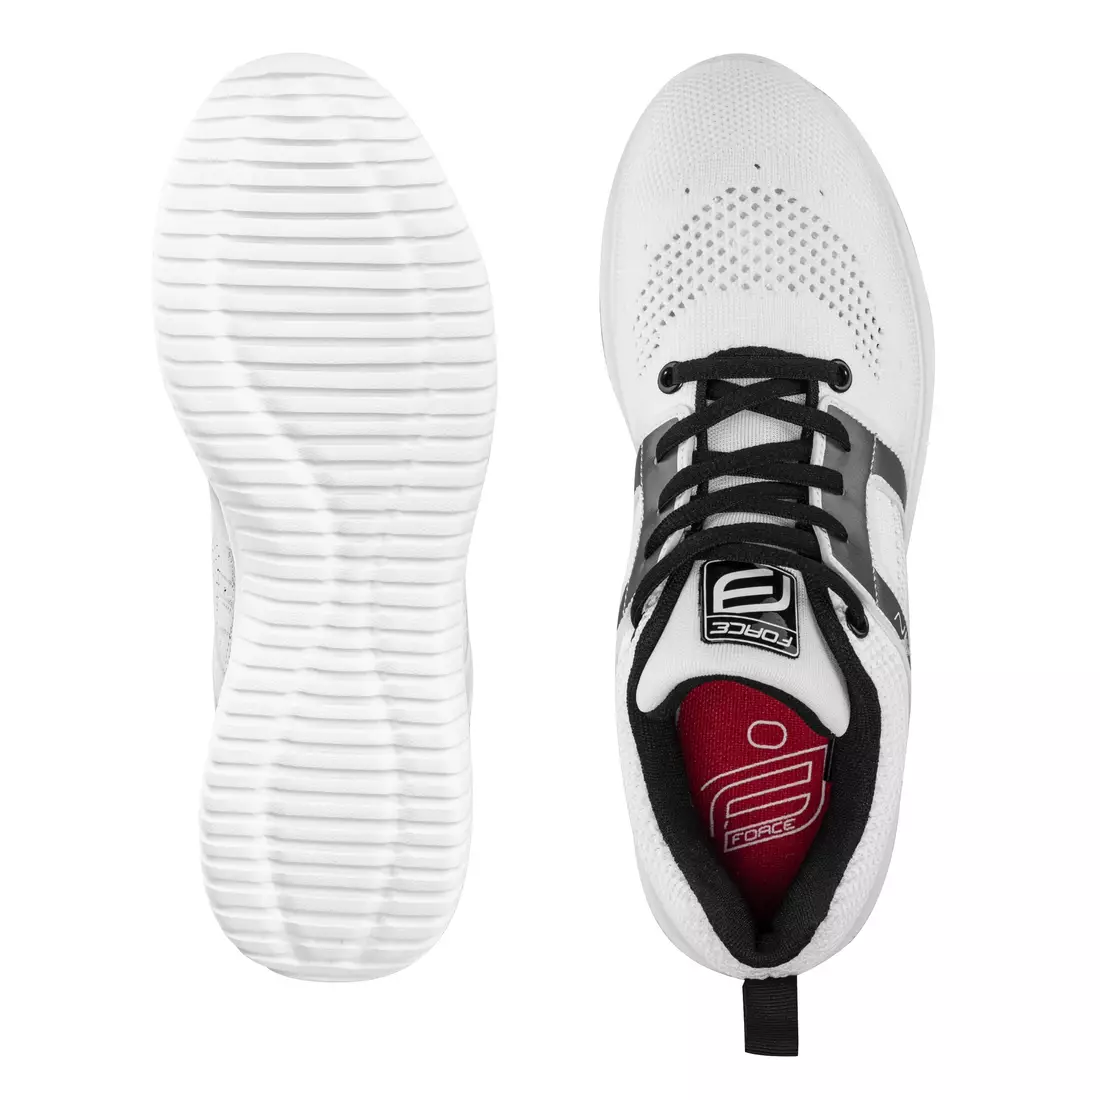 FORCE Sports shoes TITAN, White 9501136